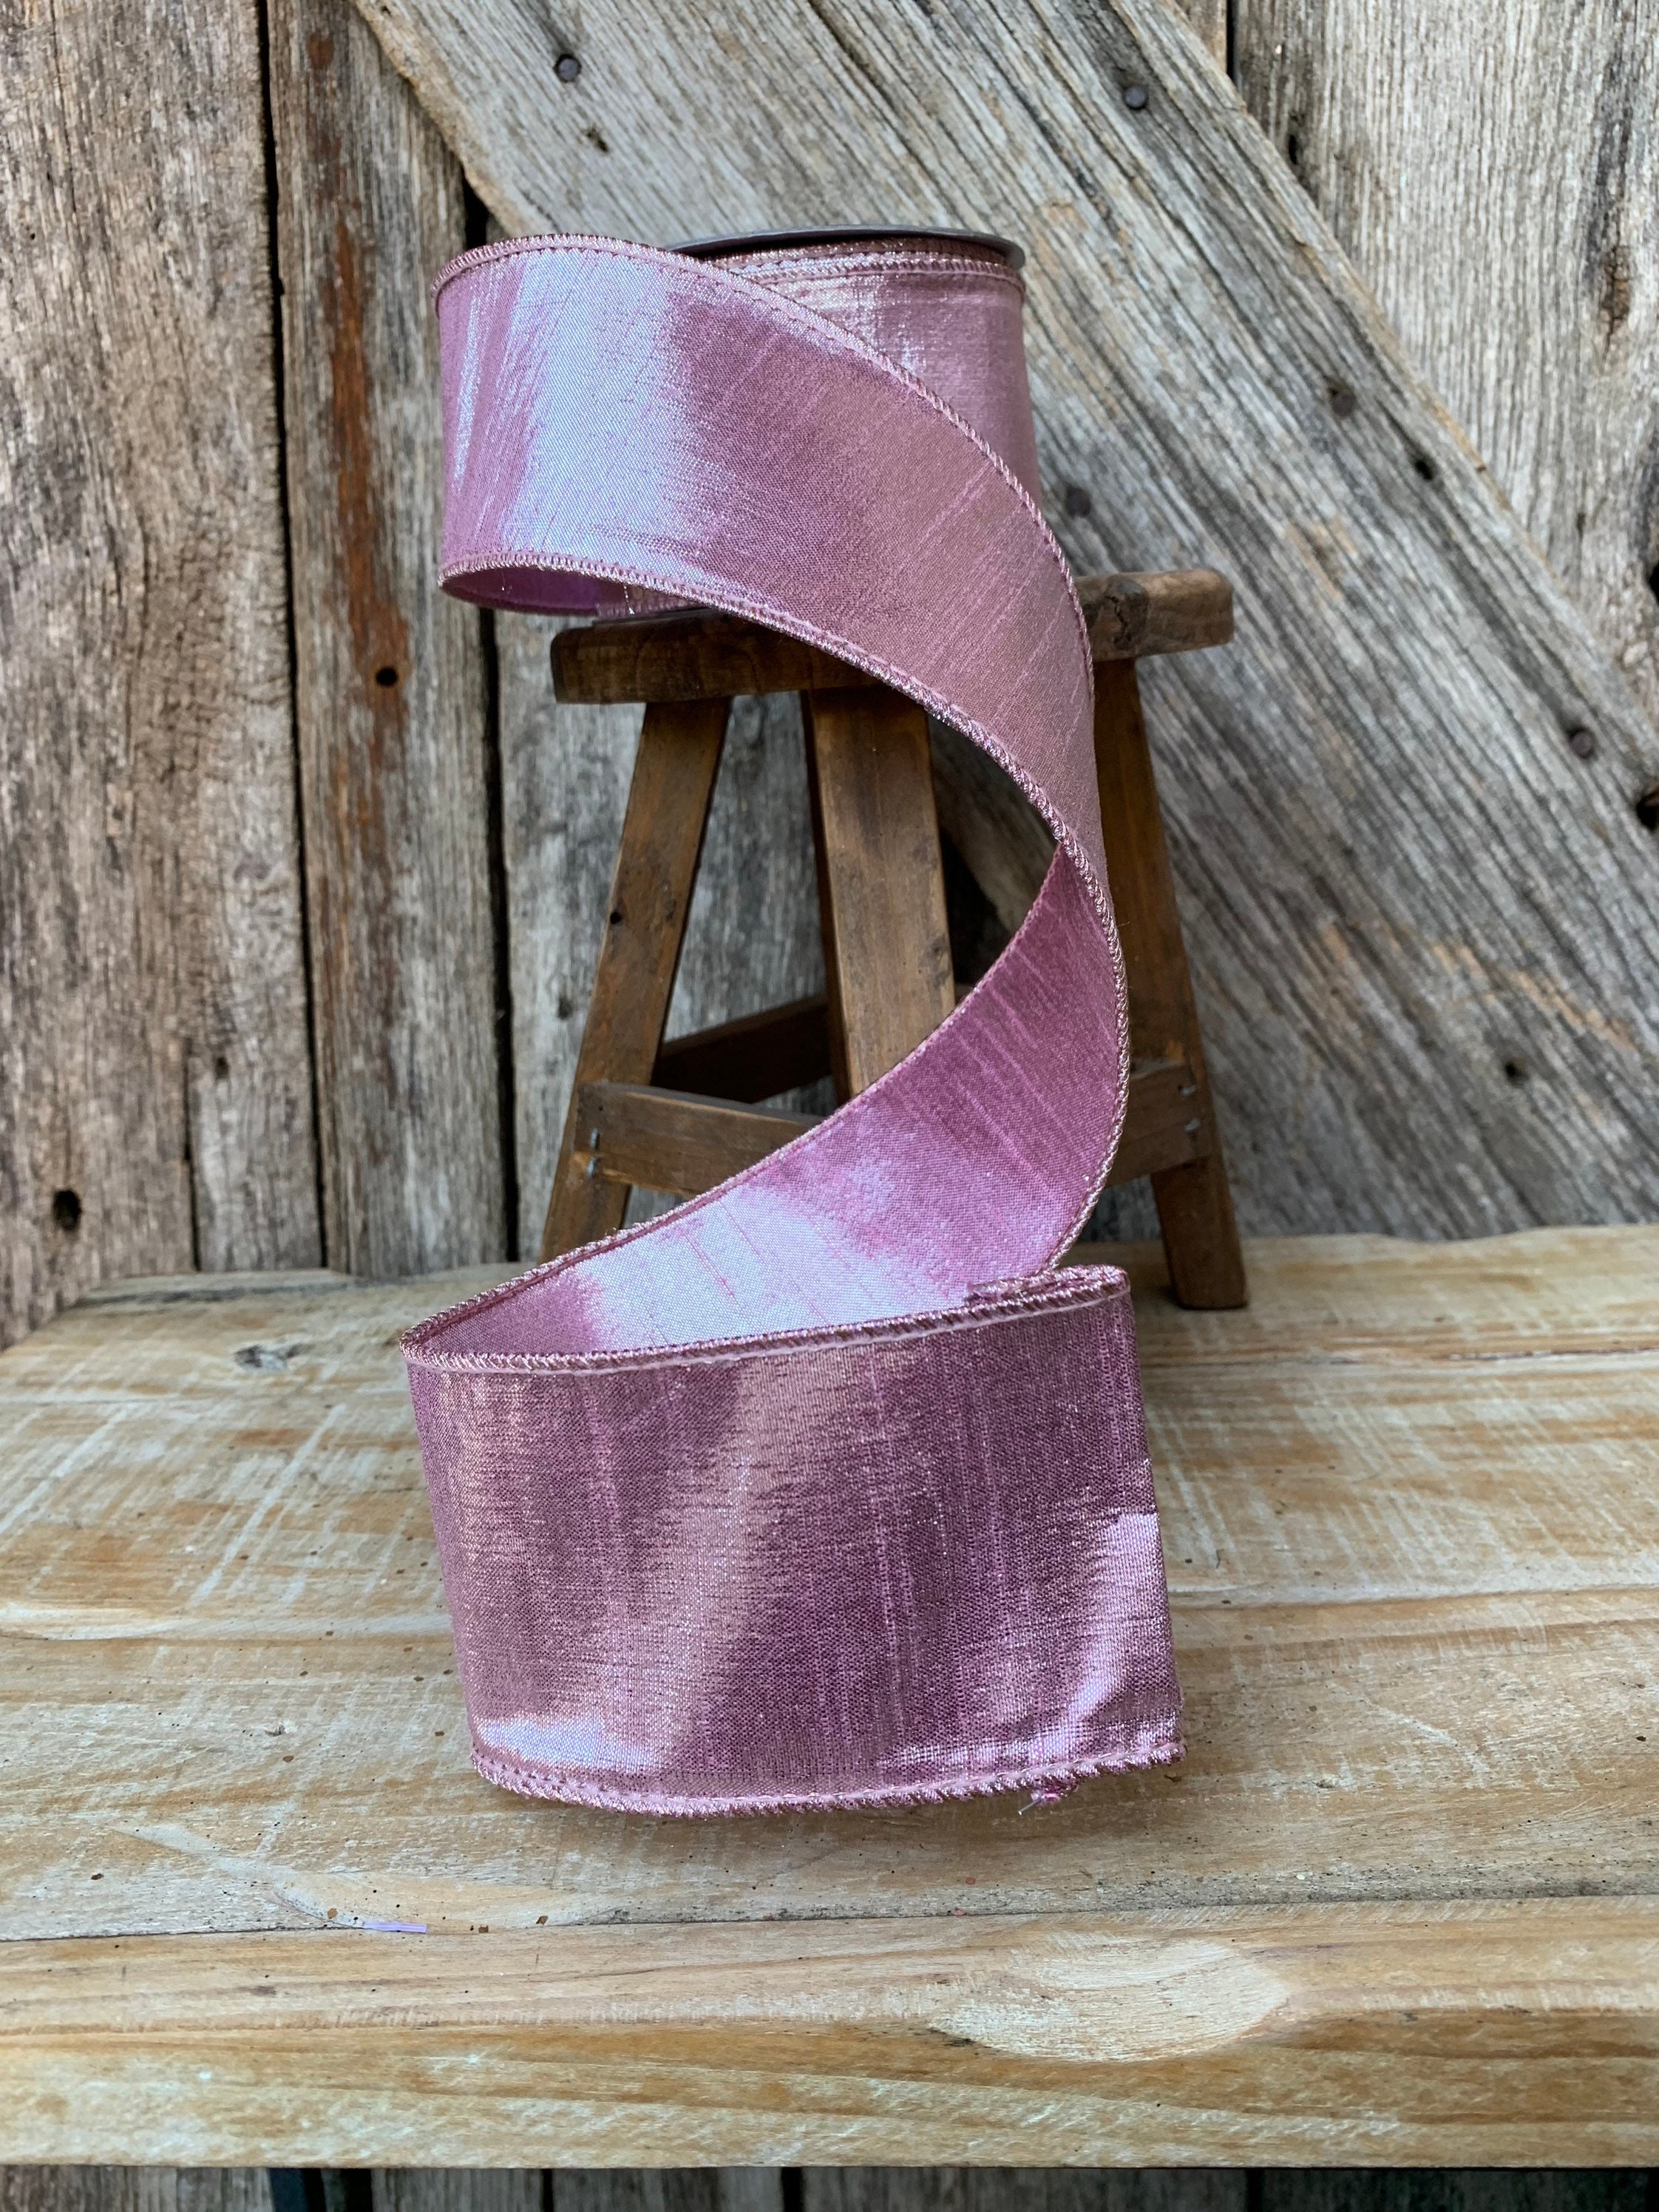 Farrisilk LUXURY 4 x 10 YD Hot Pink Glitter Candy Wired Ribbon